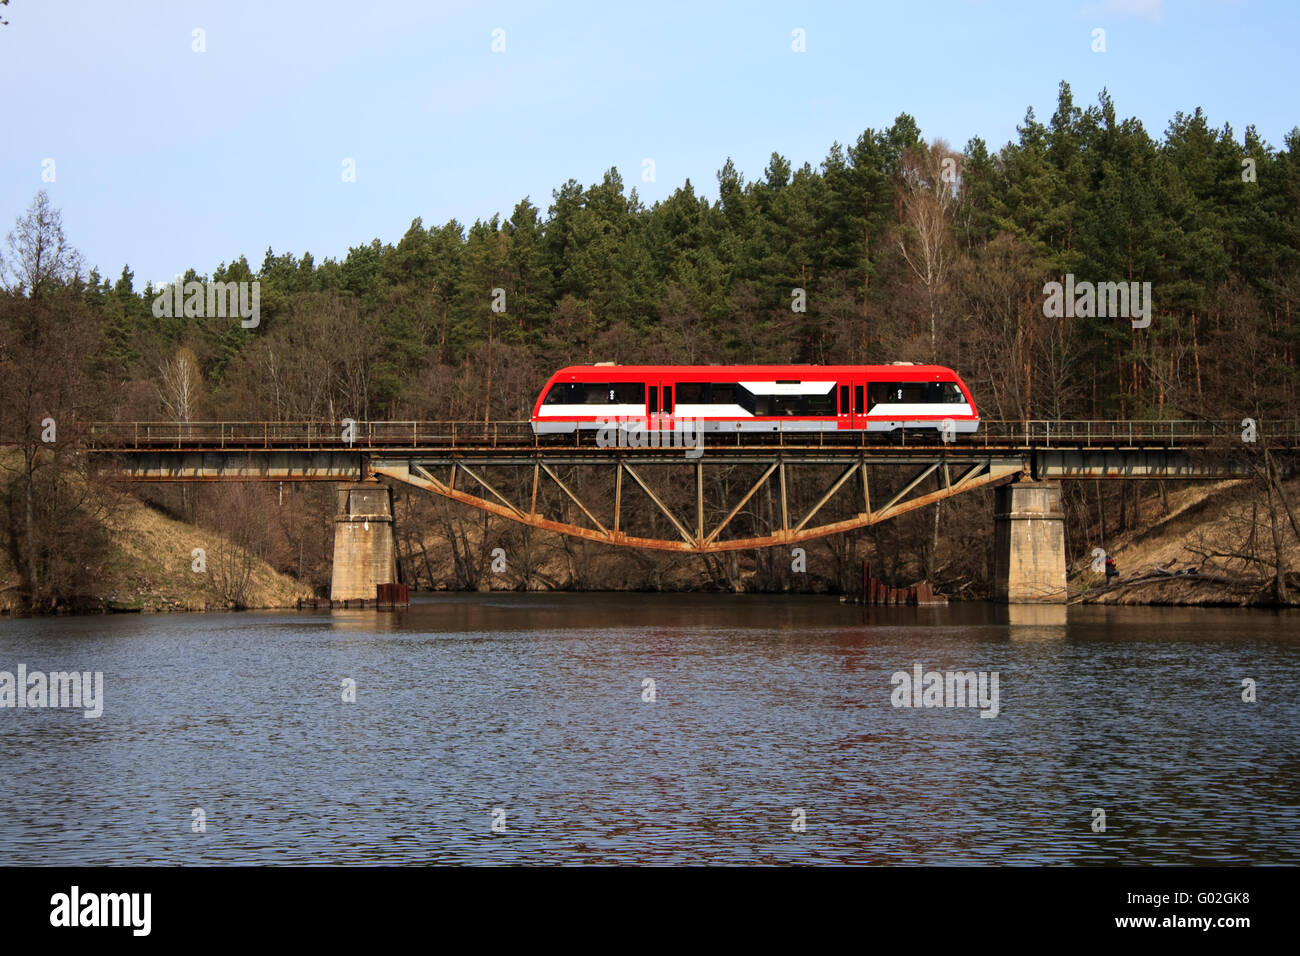 Railbus passing through the steel bridge over the lake Stock Photo